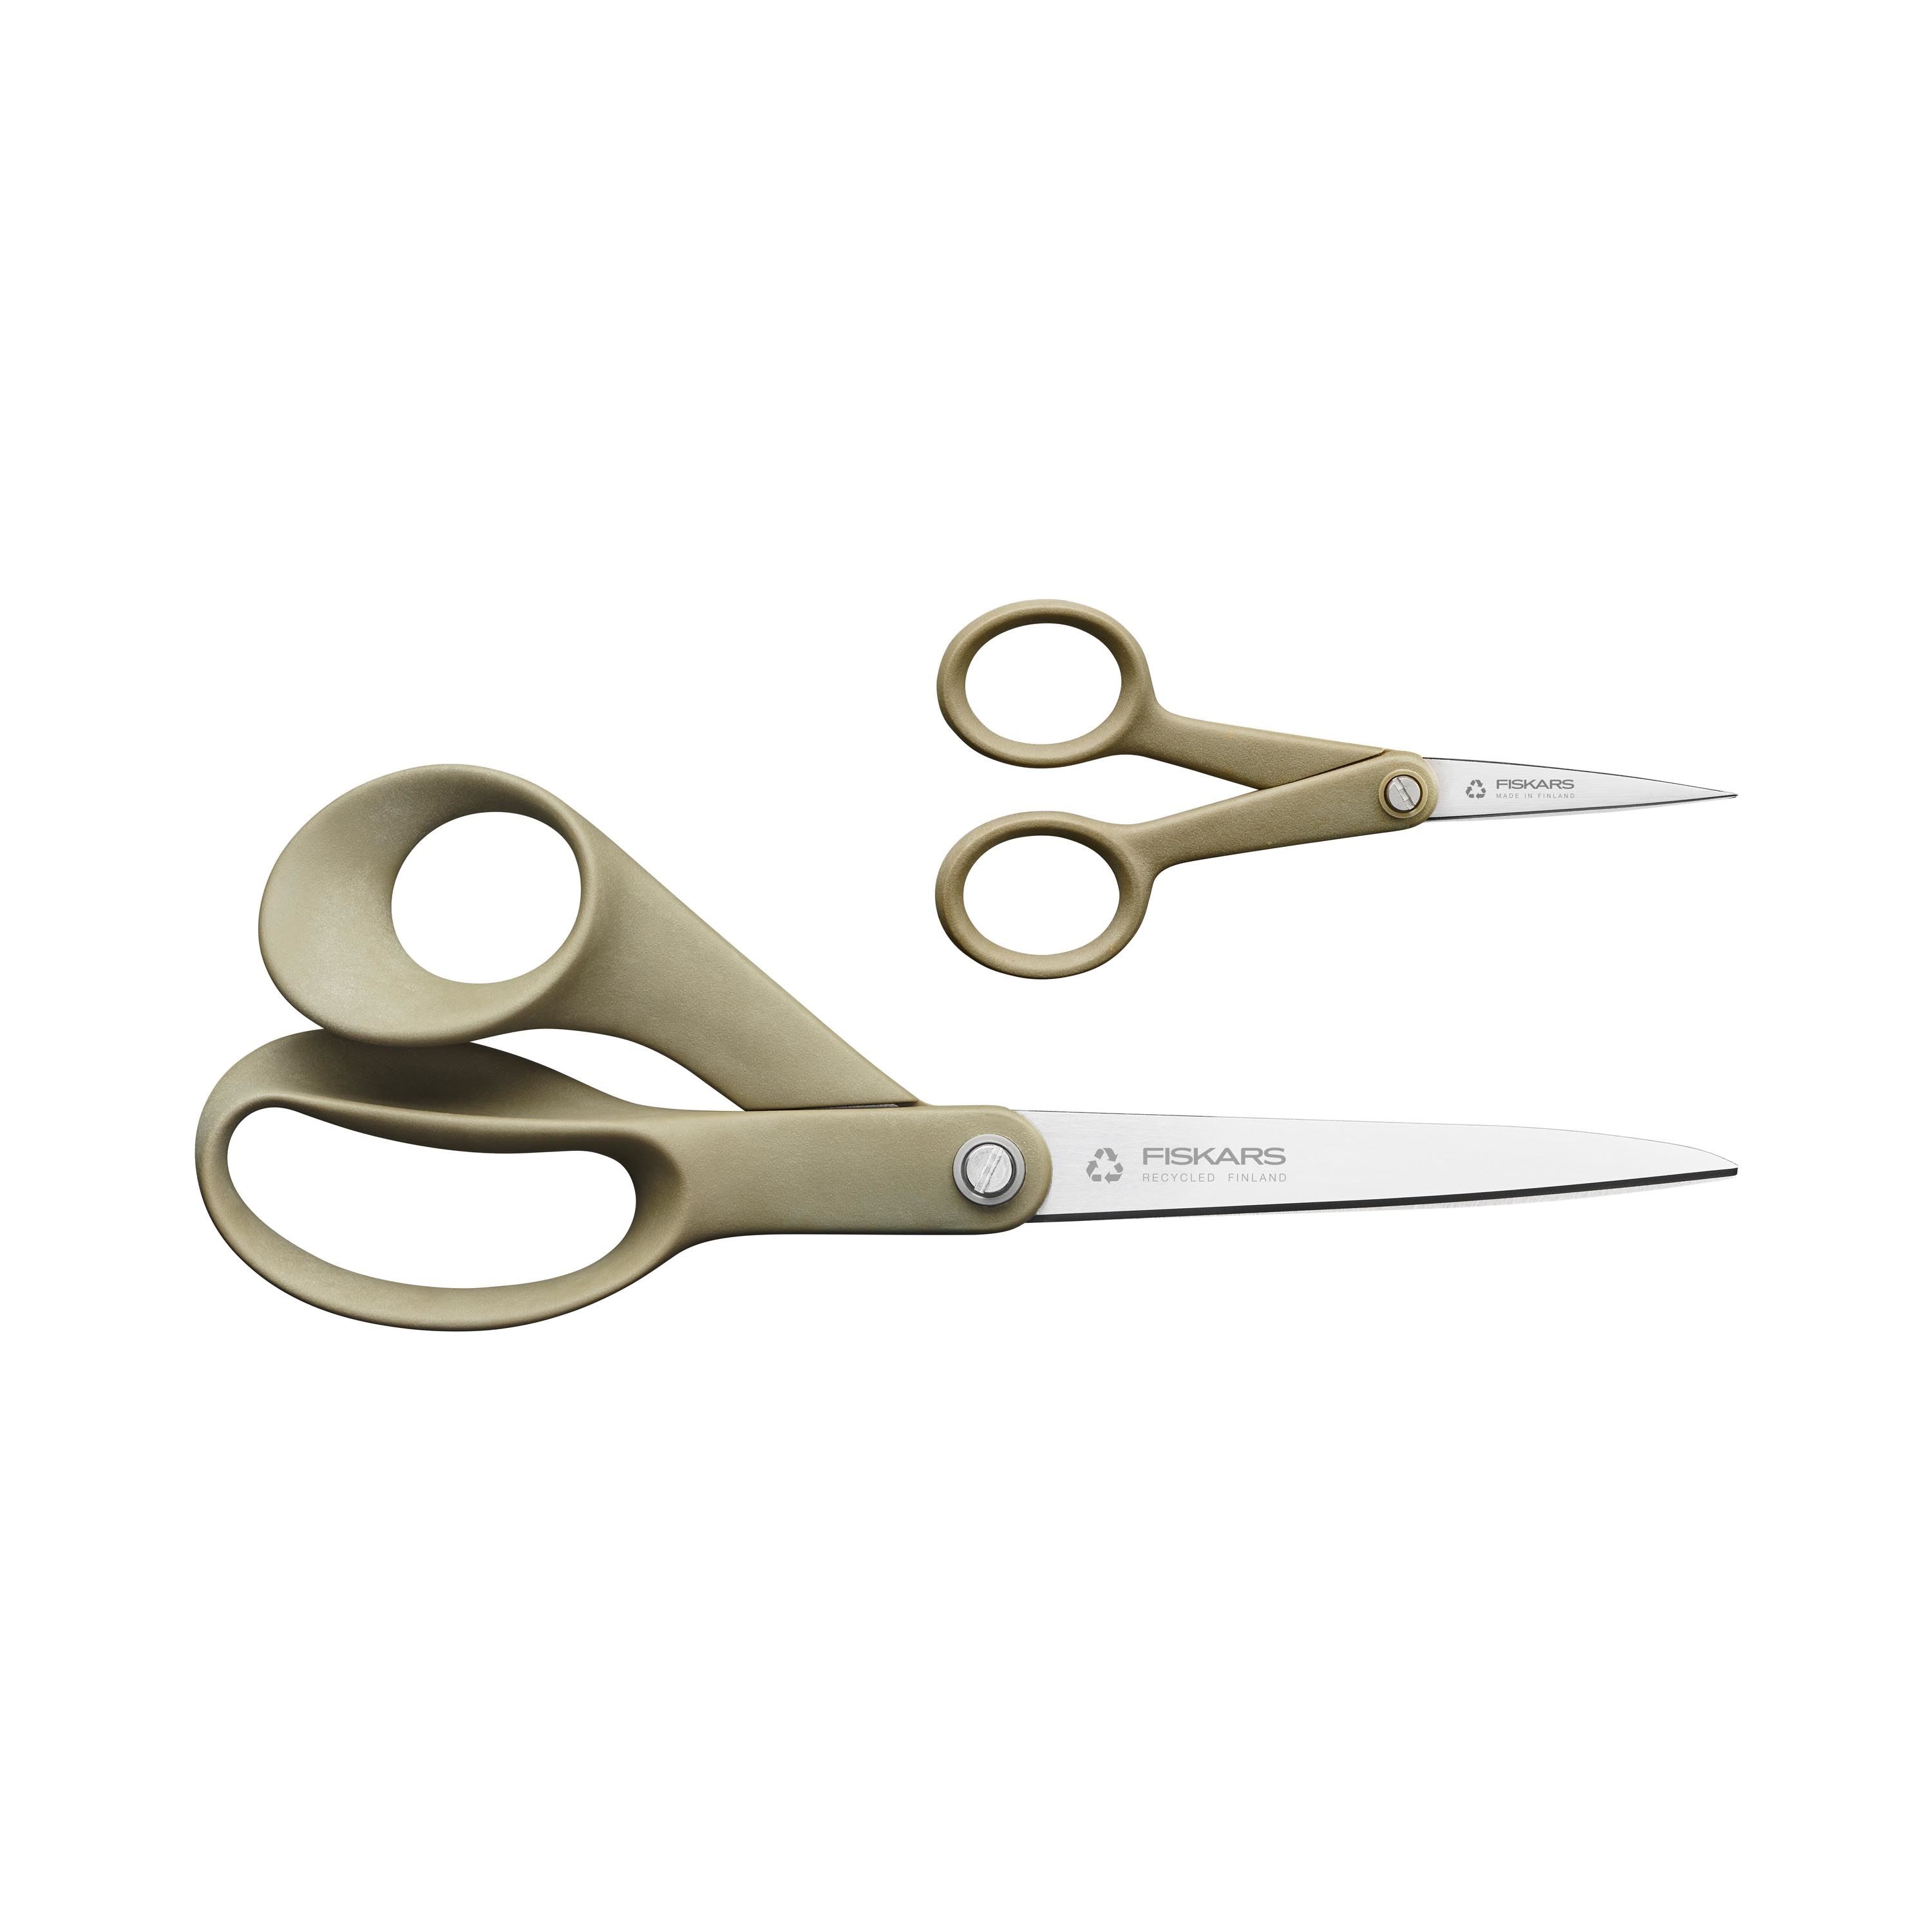 Easy Spring Scissors - Set of 4